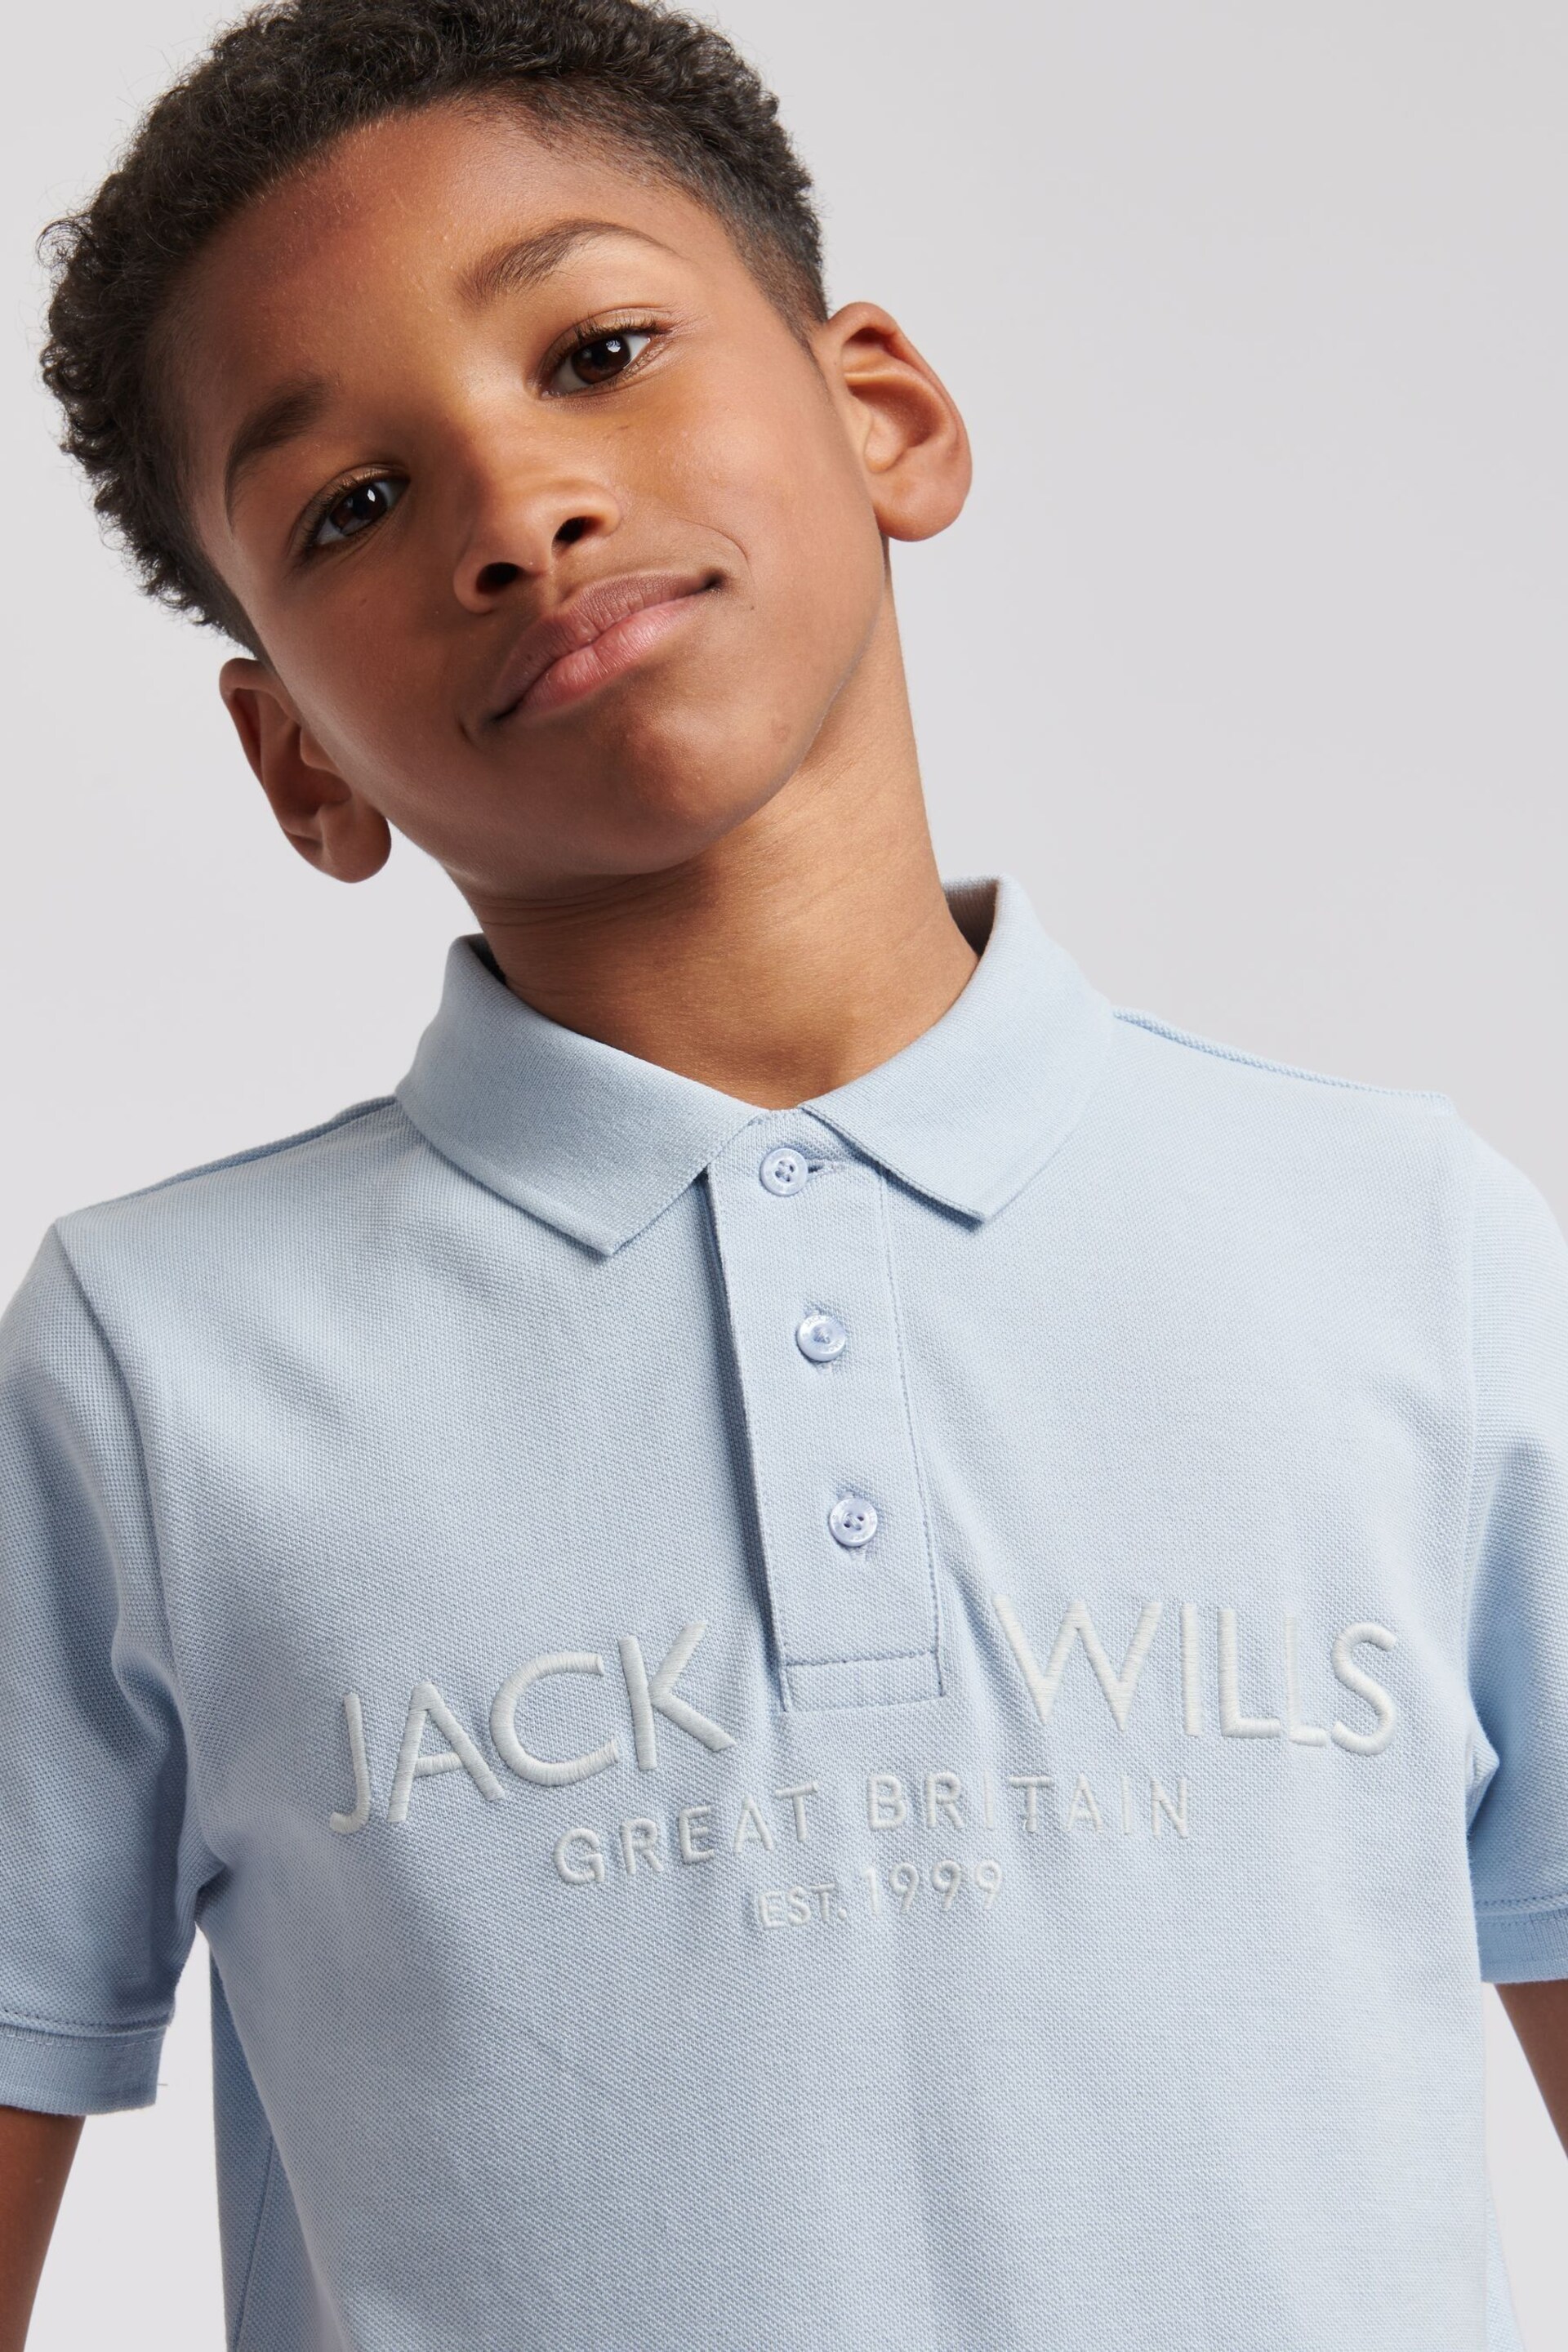 Jack Wills Boys Pique Polo Shirt - Image 3 of 7